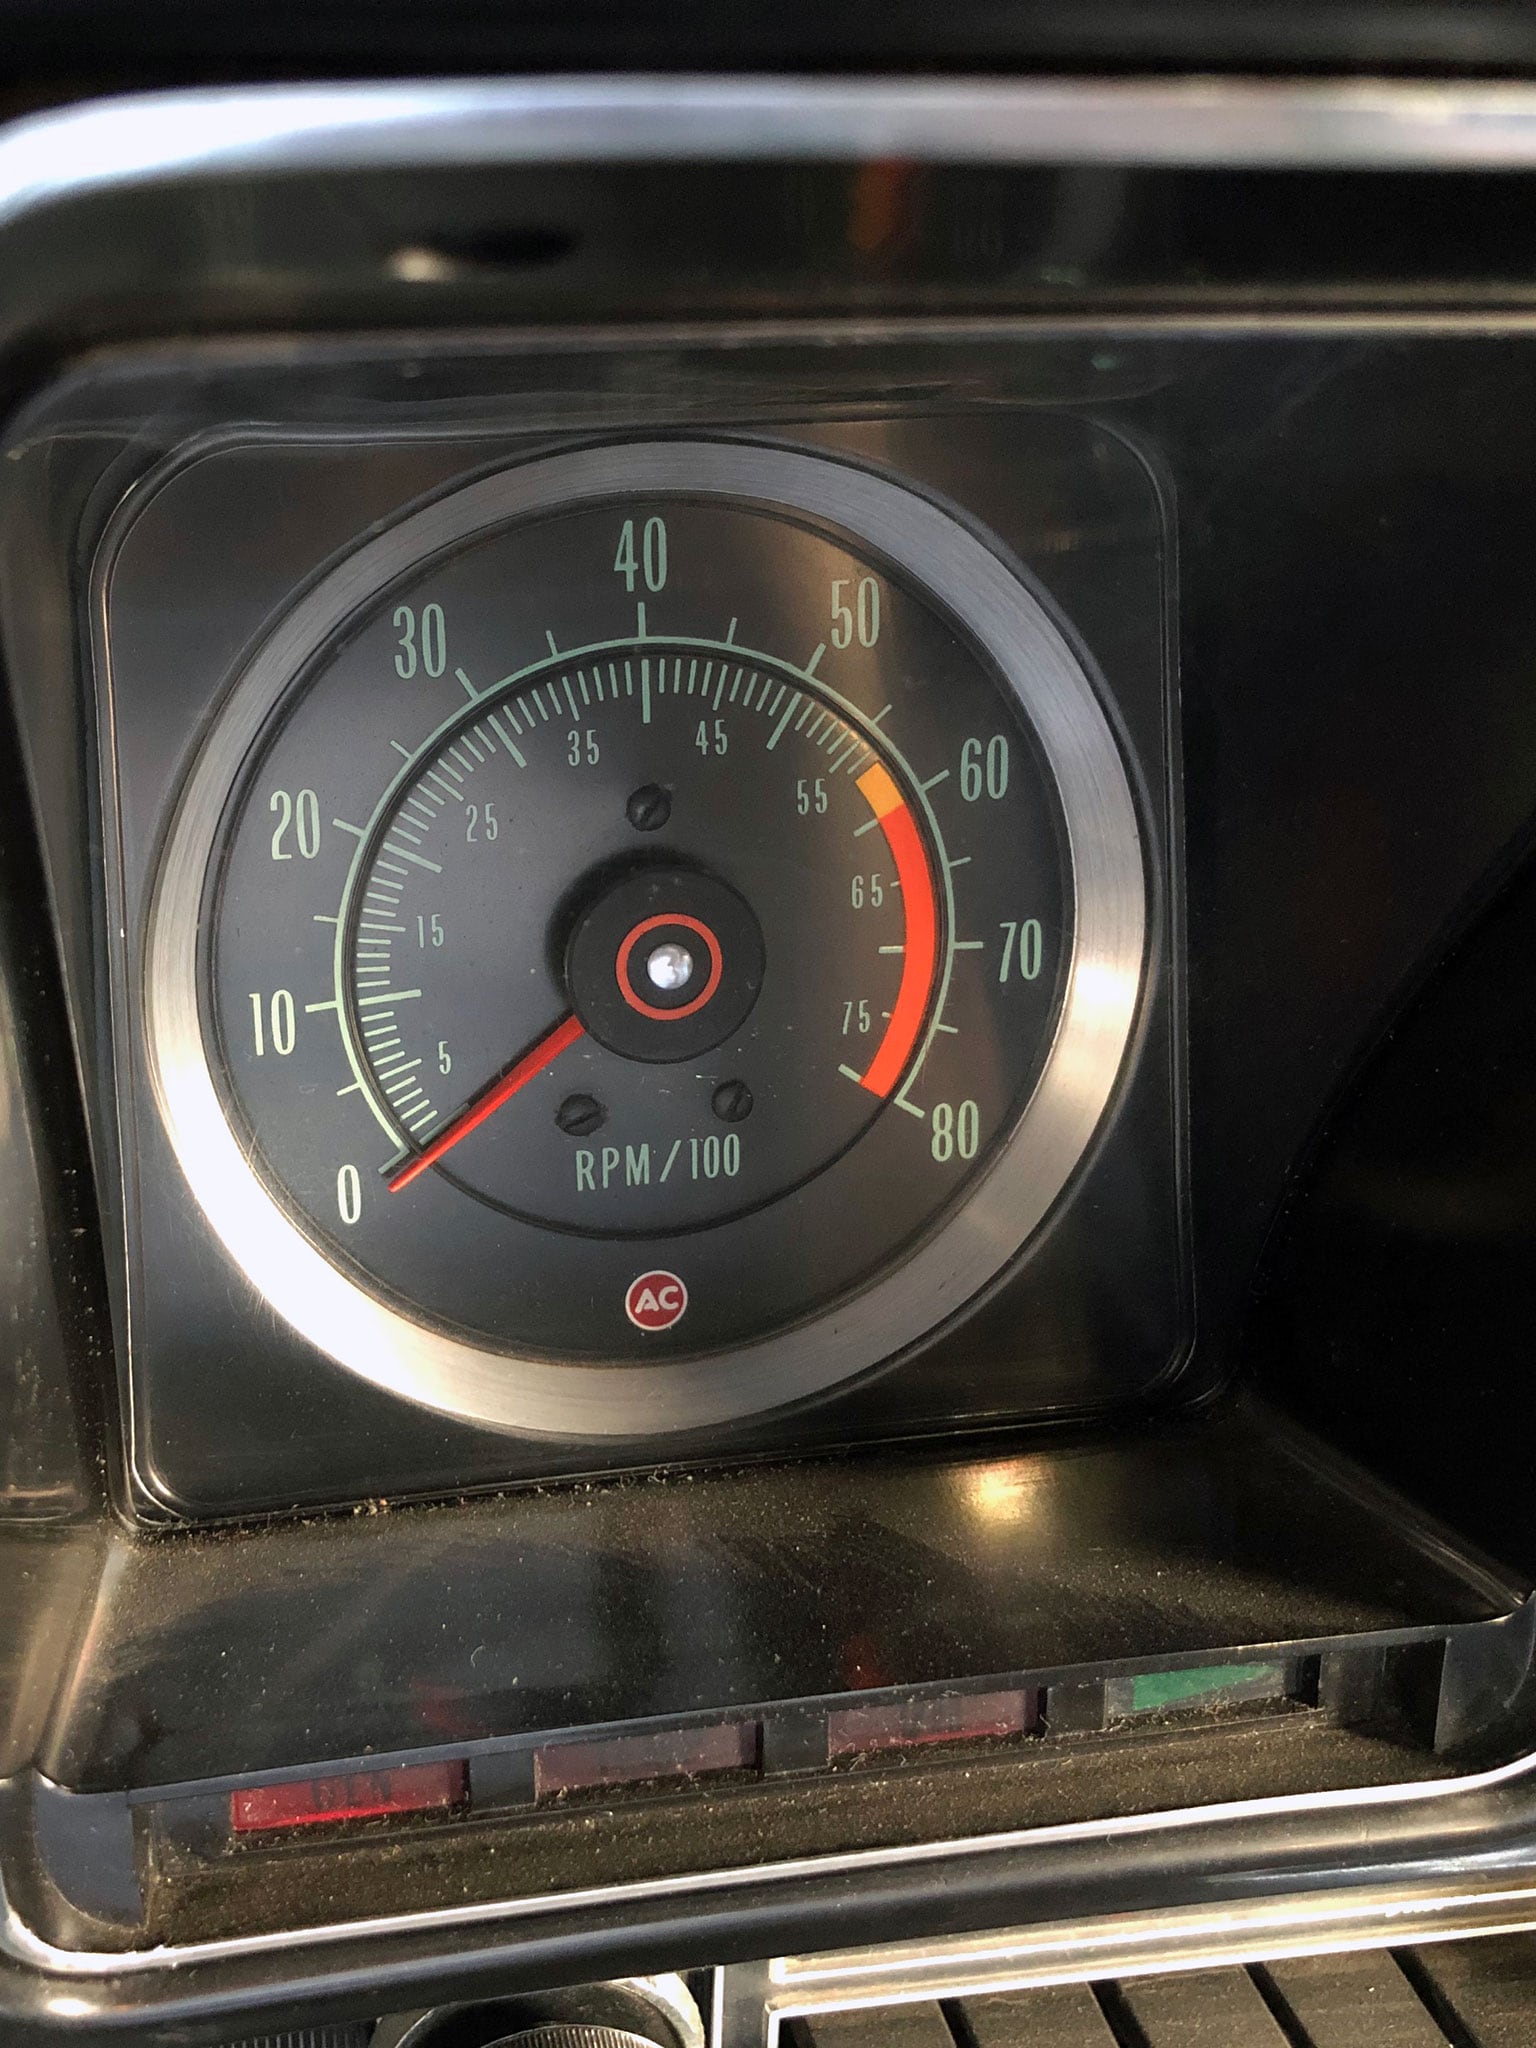 182 1969 Camaro Z28 tach 8000 rpm 6000 rpm redline